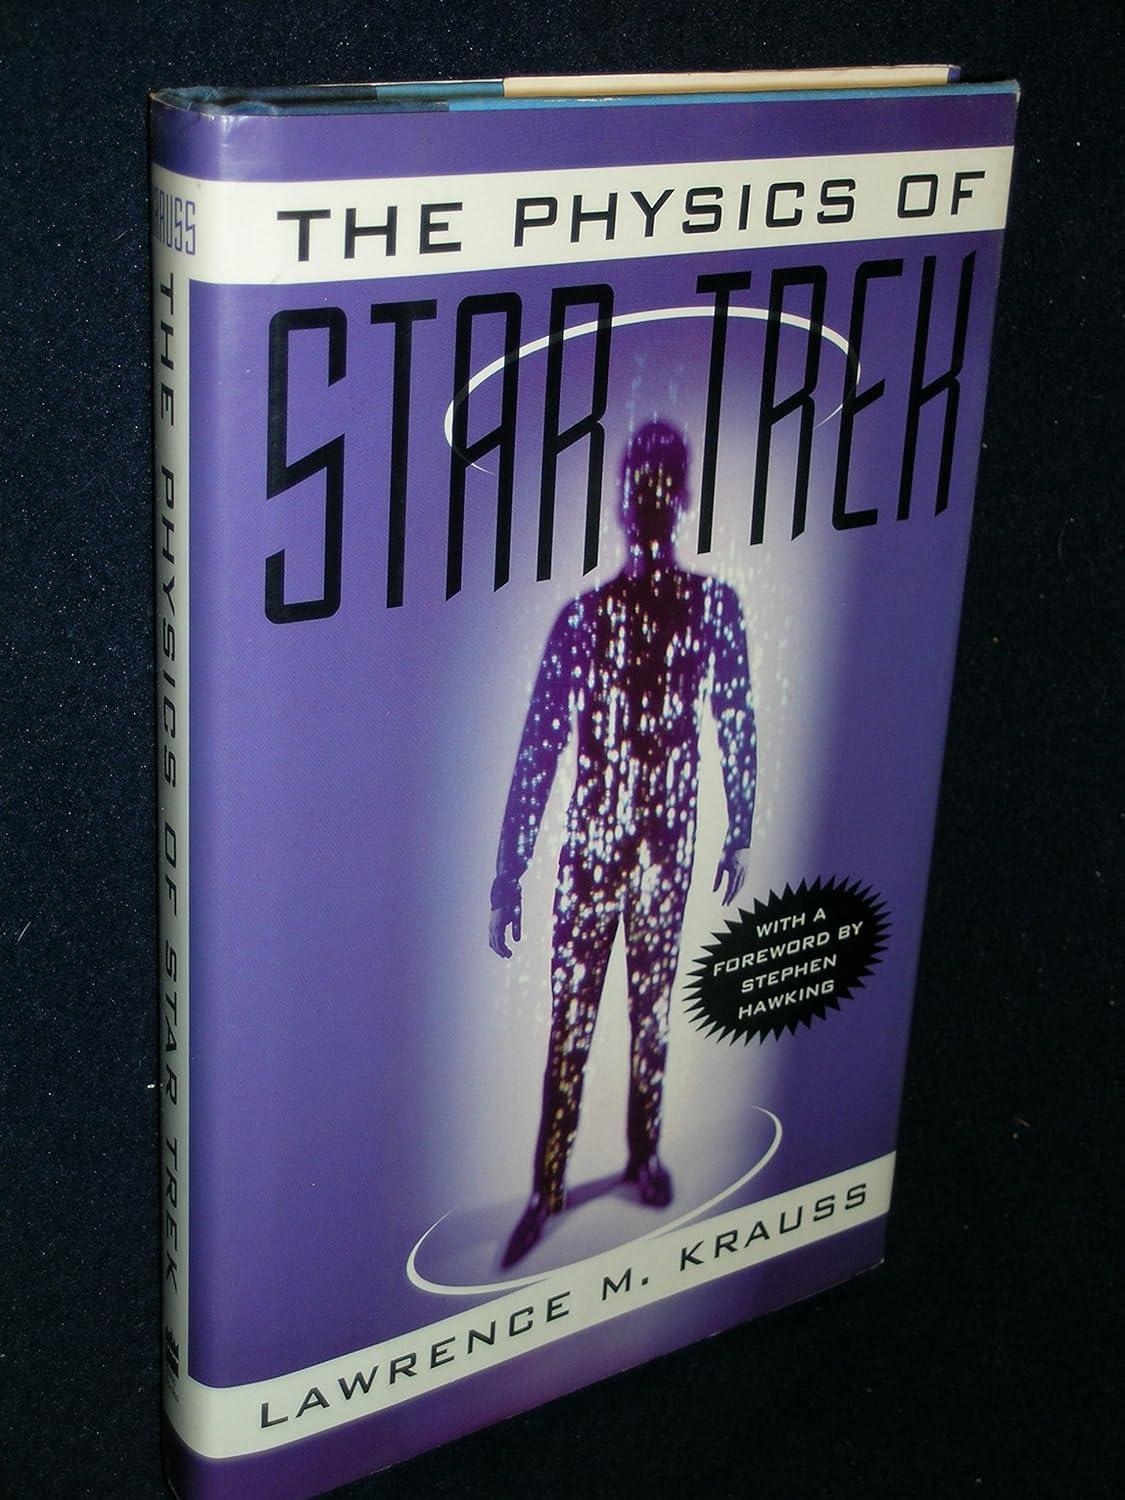 the physics of star trek 1st edition lawrence m. krauss 0465005594, 978-0465005598